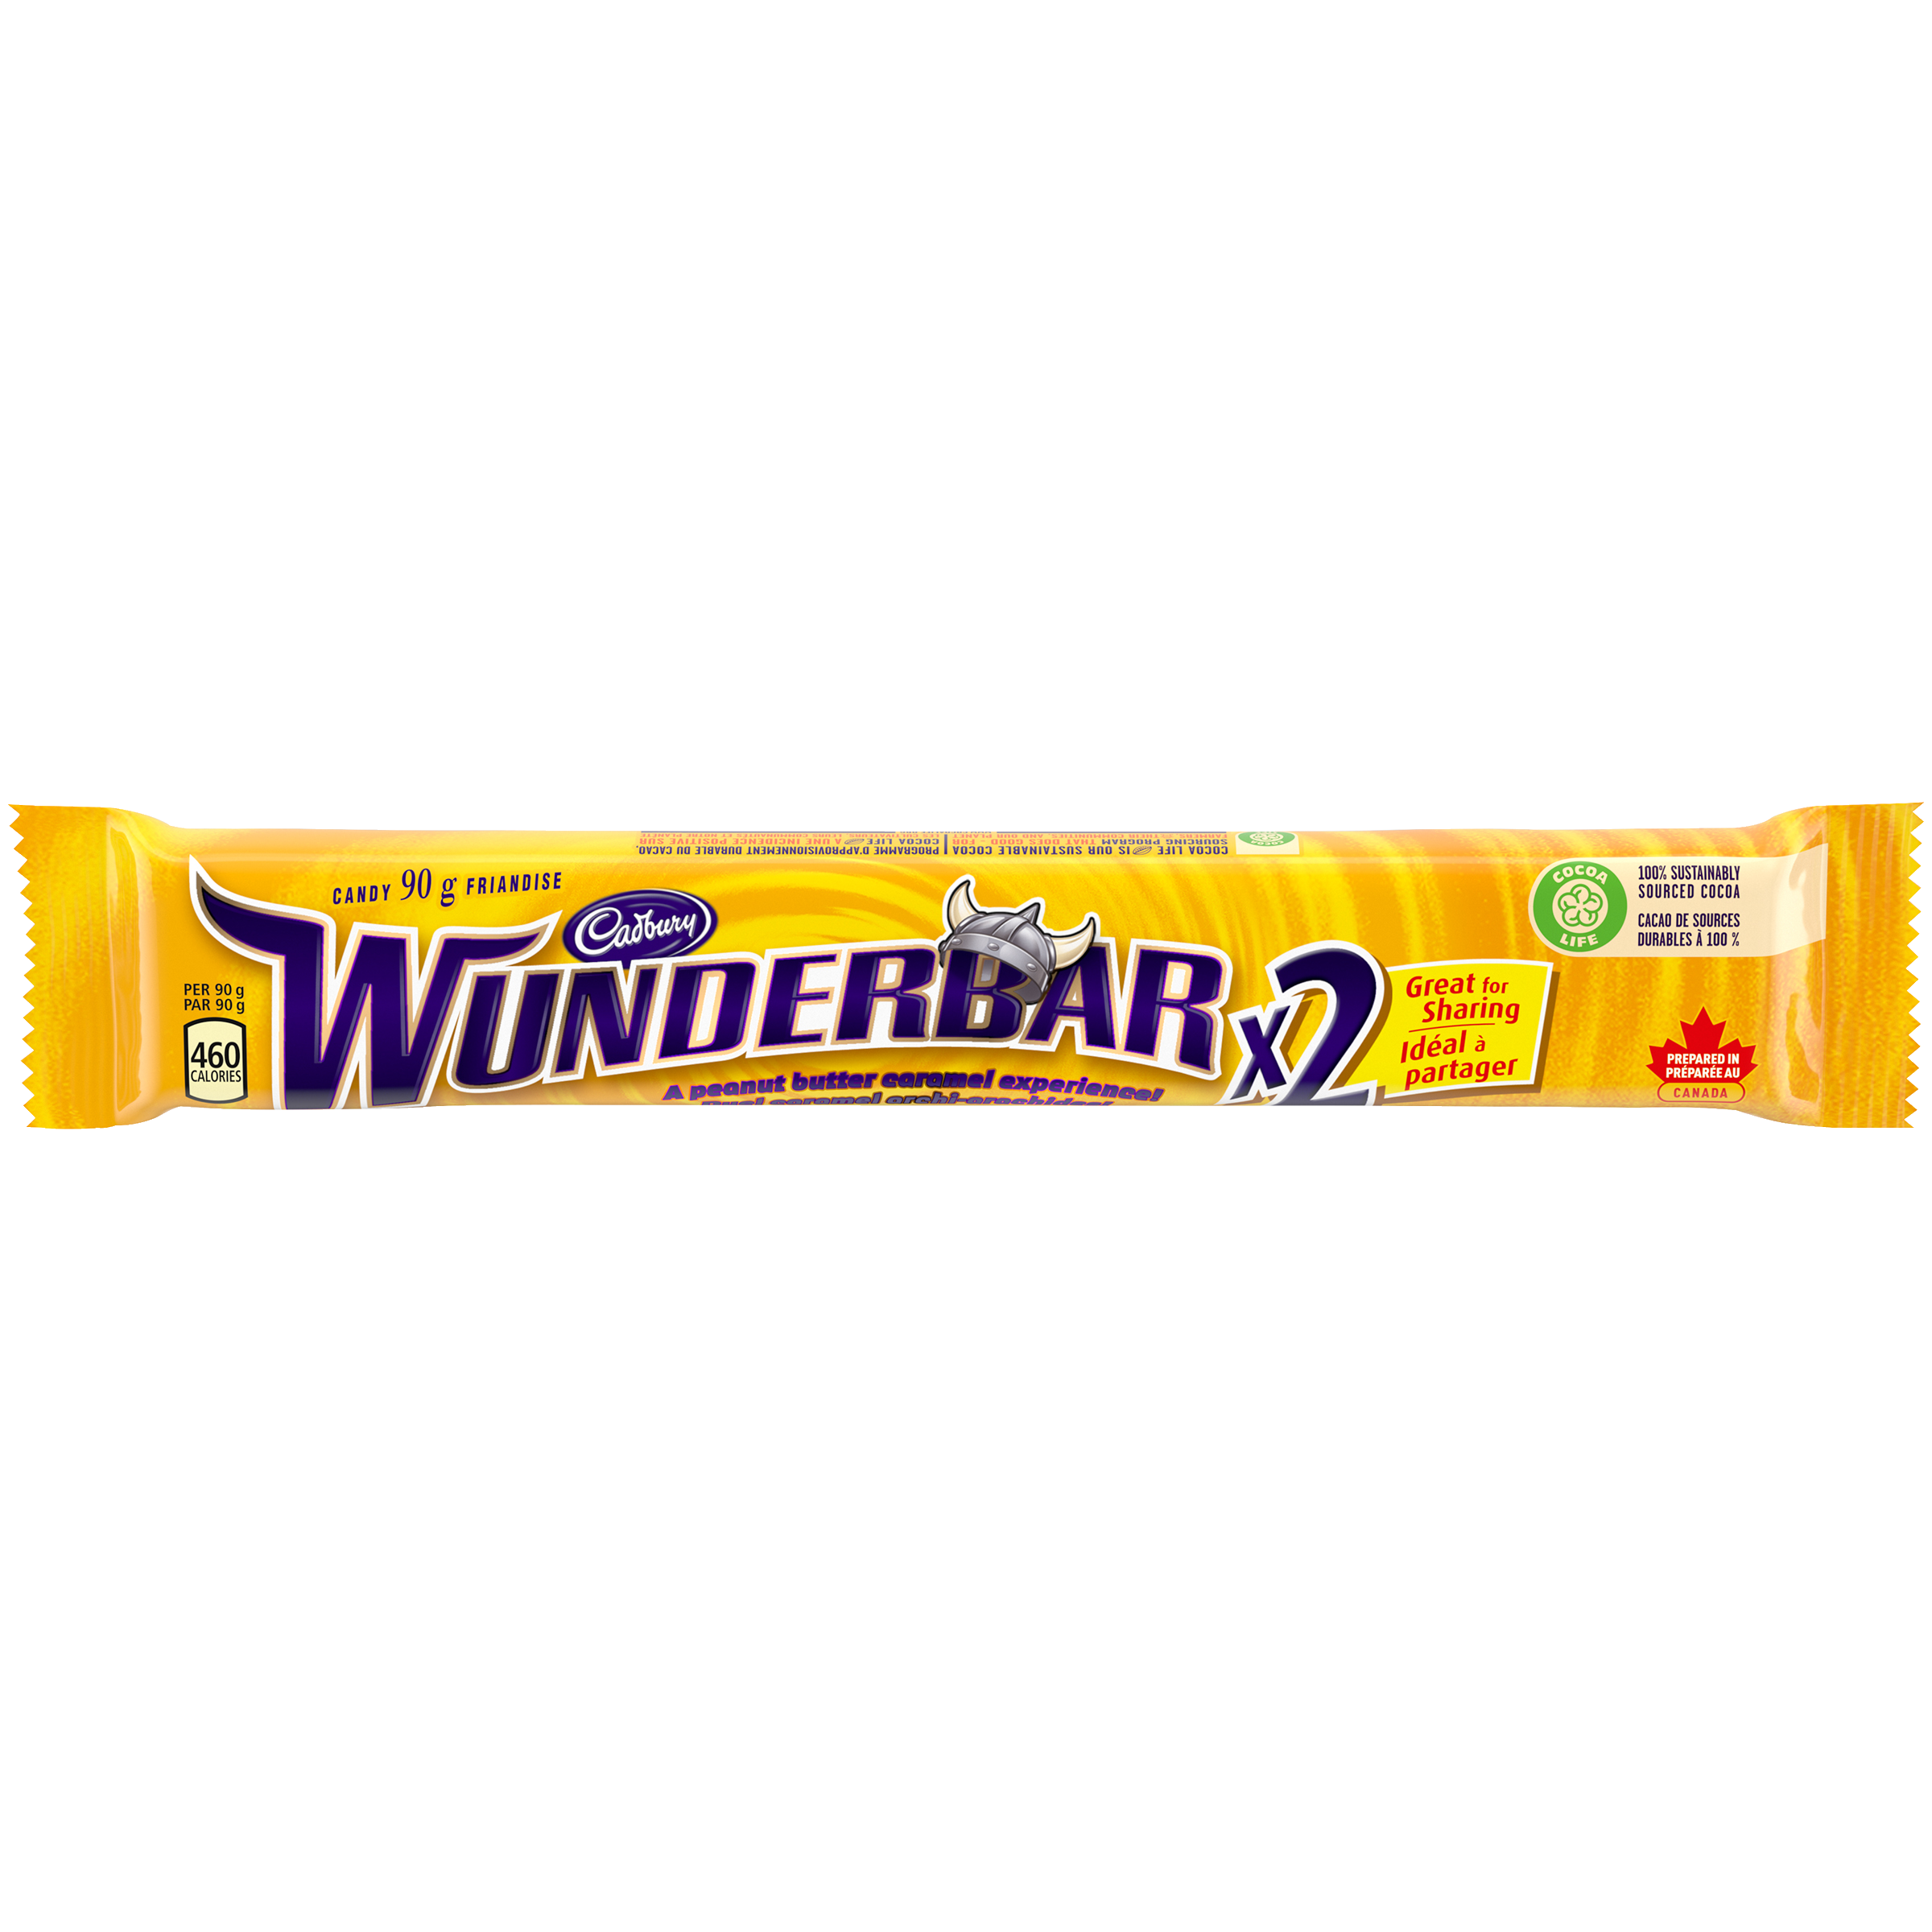 Cadbury Wunderbar King Size (90g)